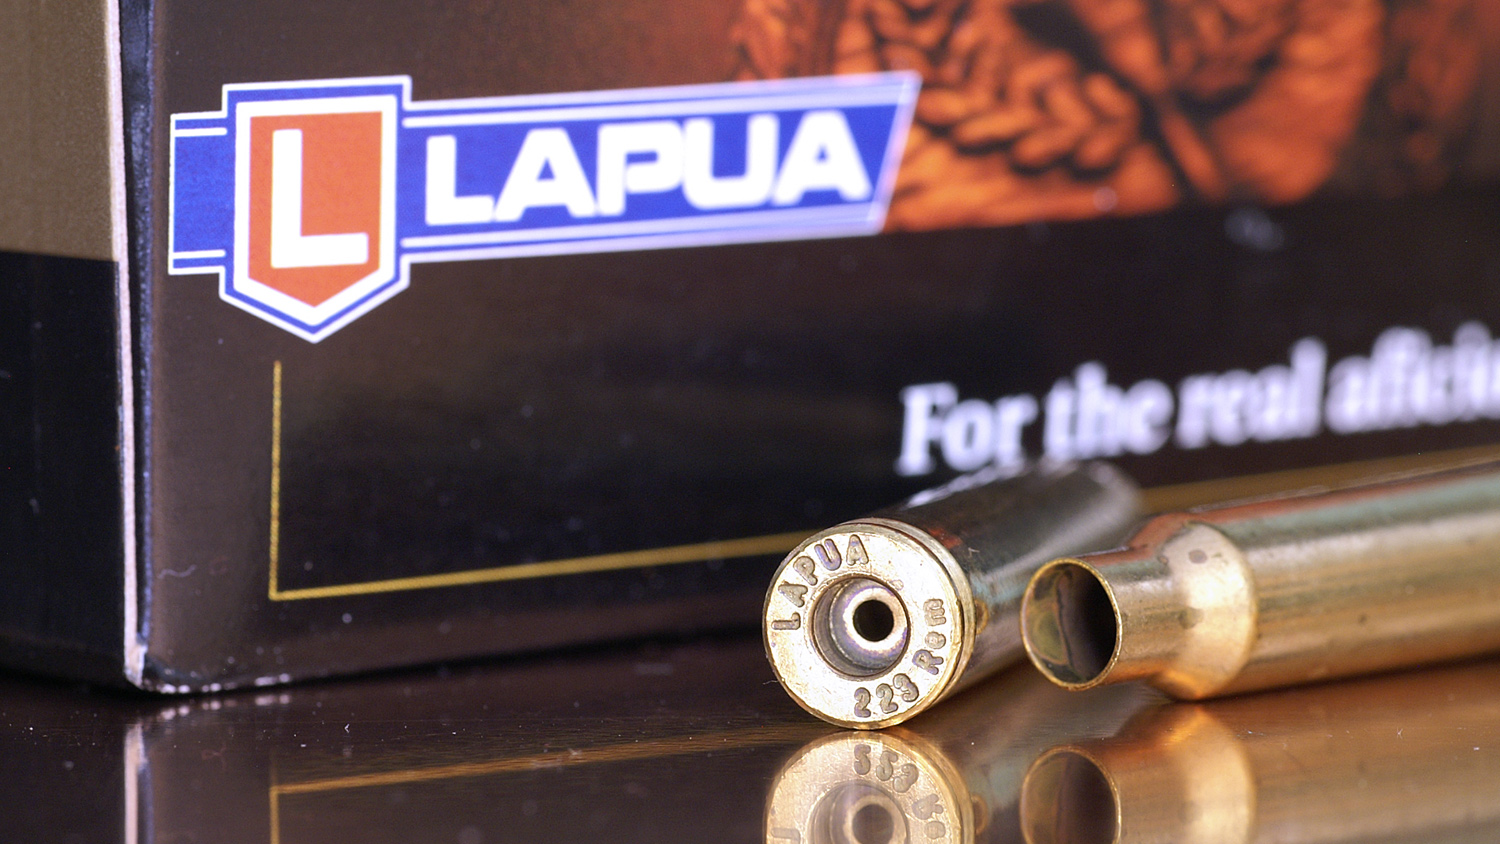 Lapua premium cartridge cases for high power rifle